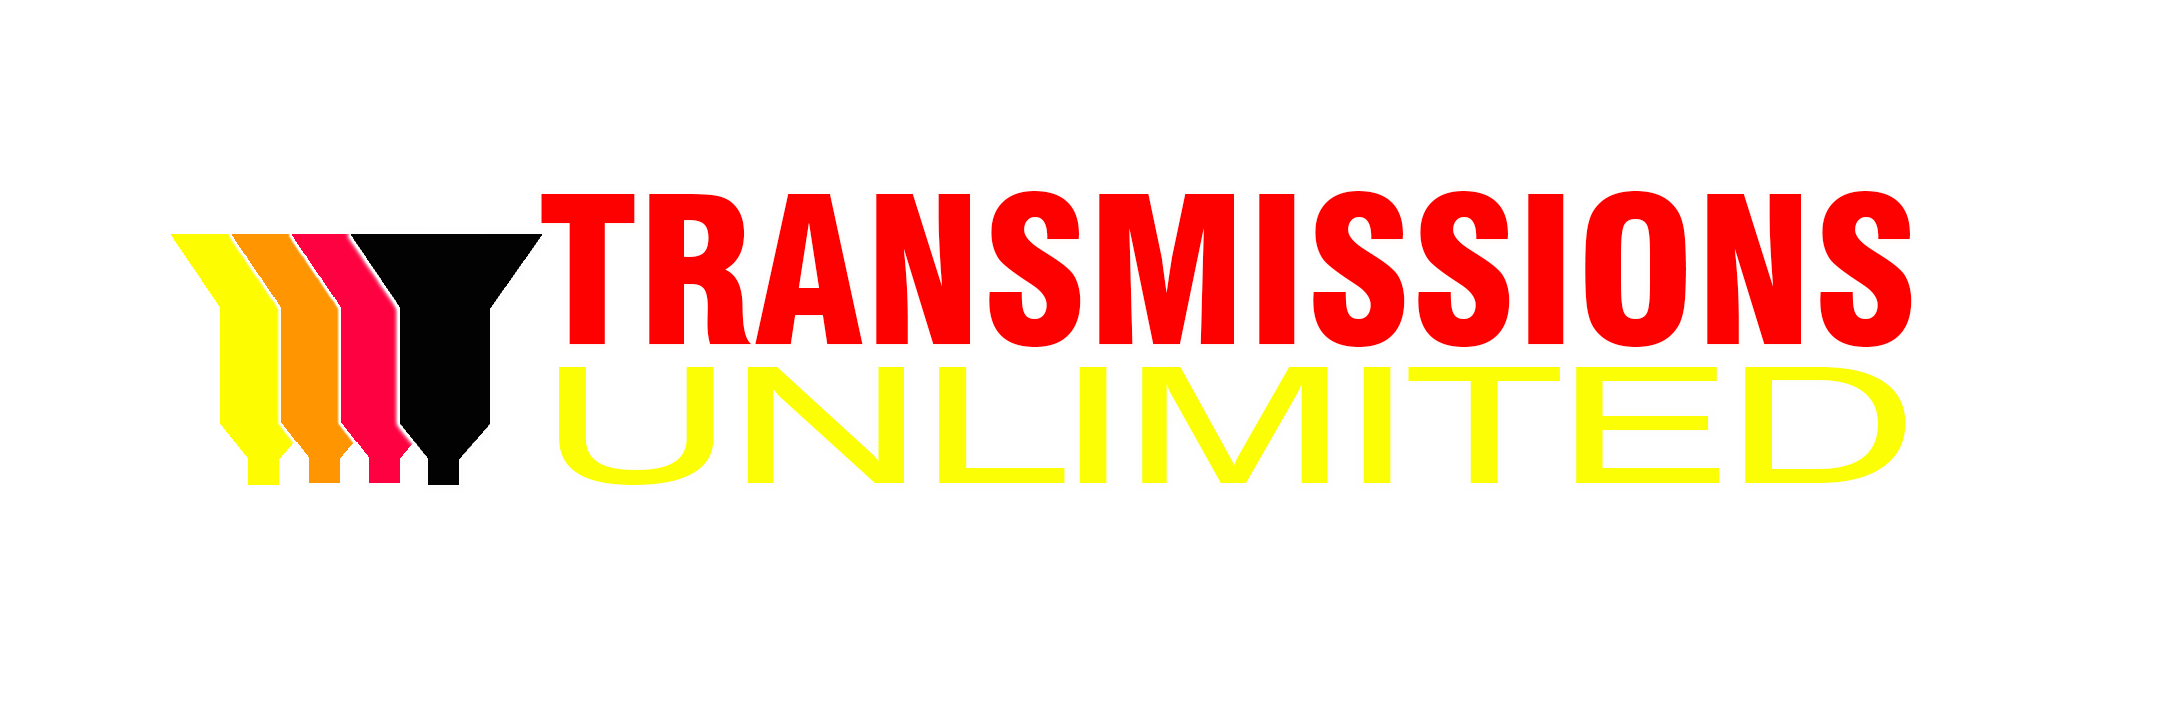 Logo Transmissions Unlimited